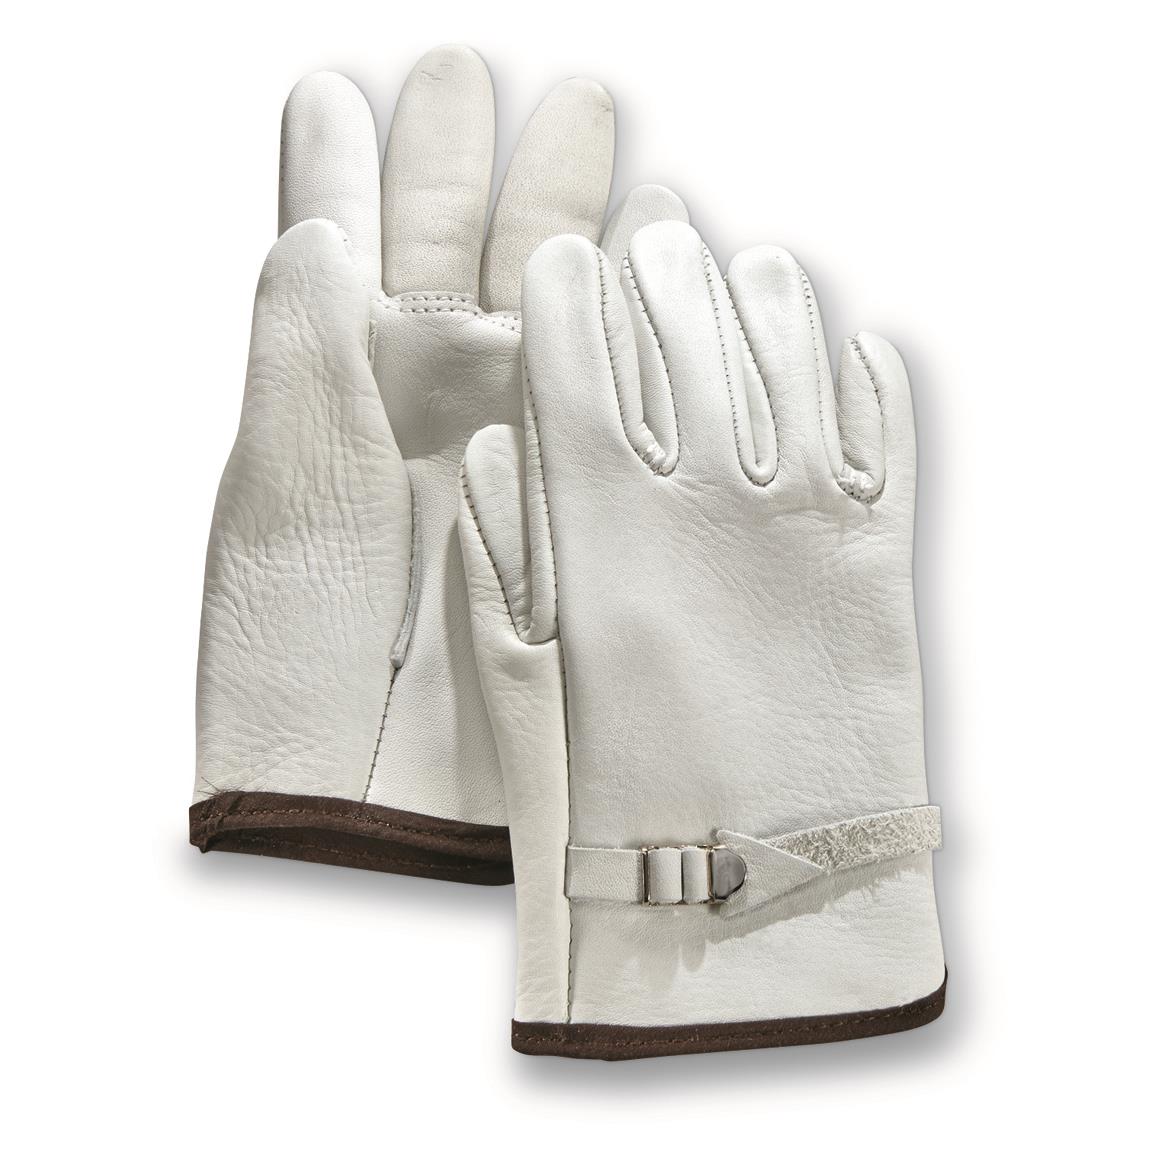 U.S. Military Surplus Wildland Firefighter Leather Duty Gloves, 4 Pack, New, Cream